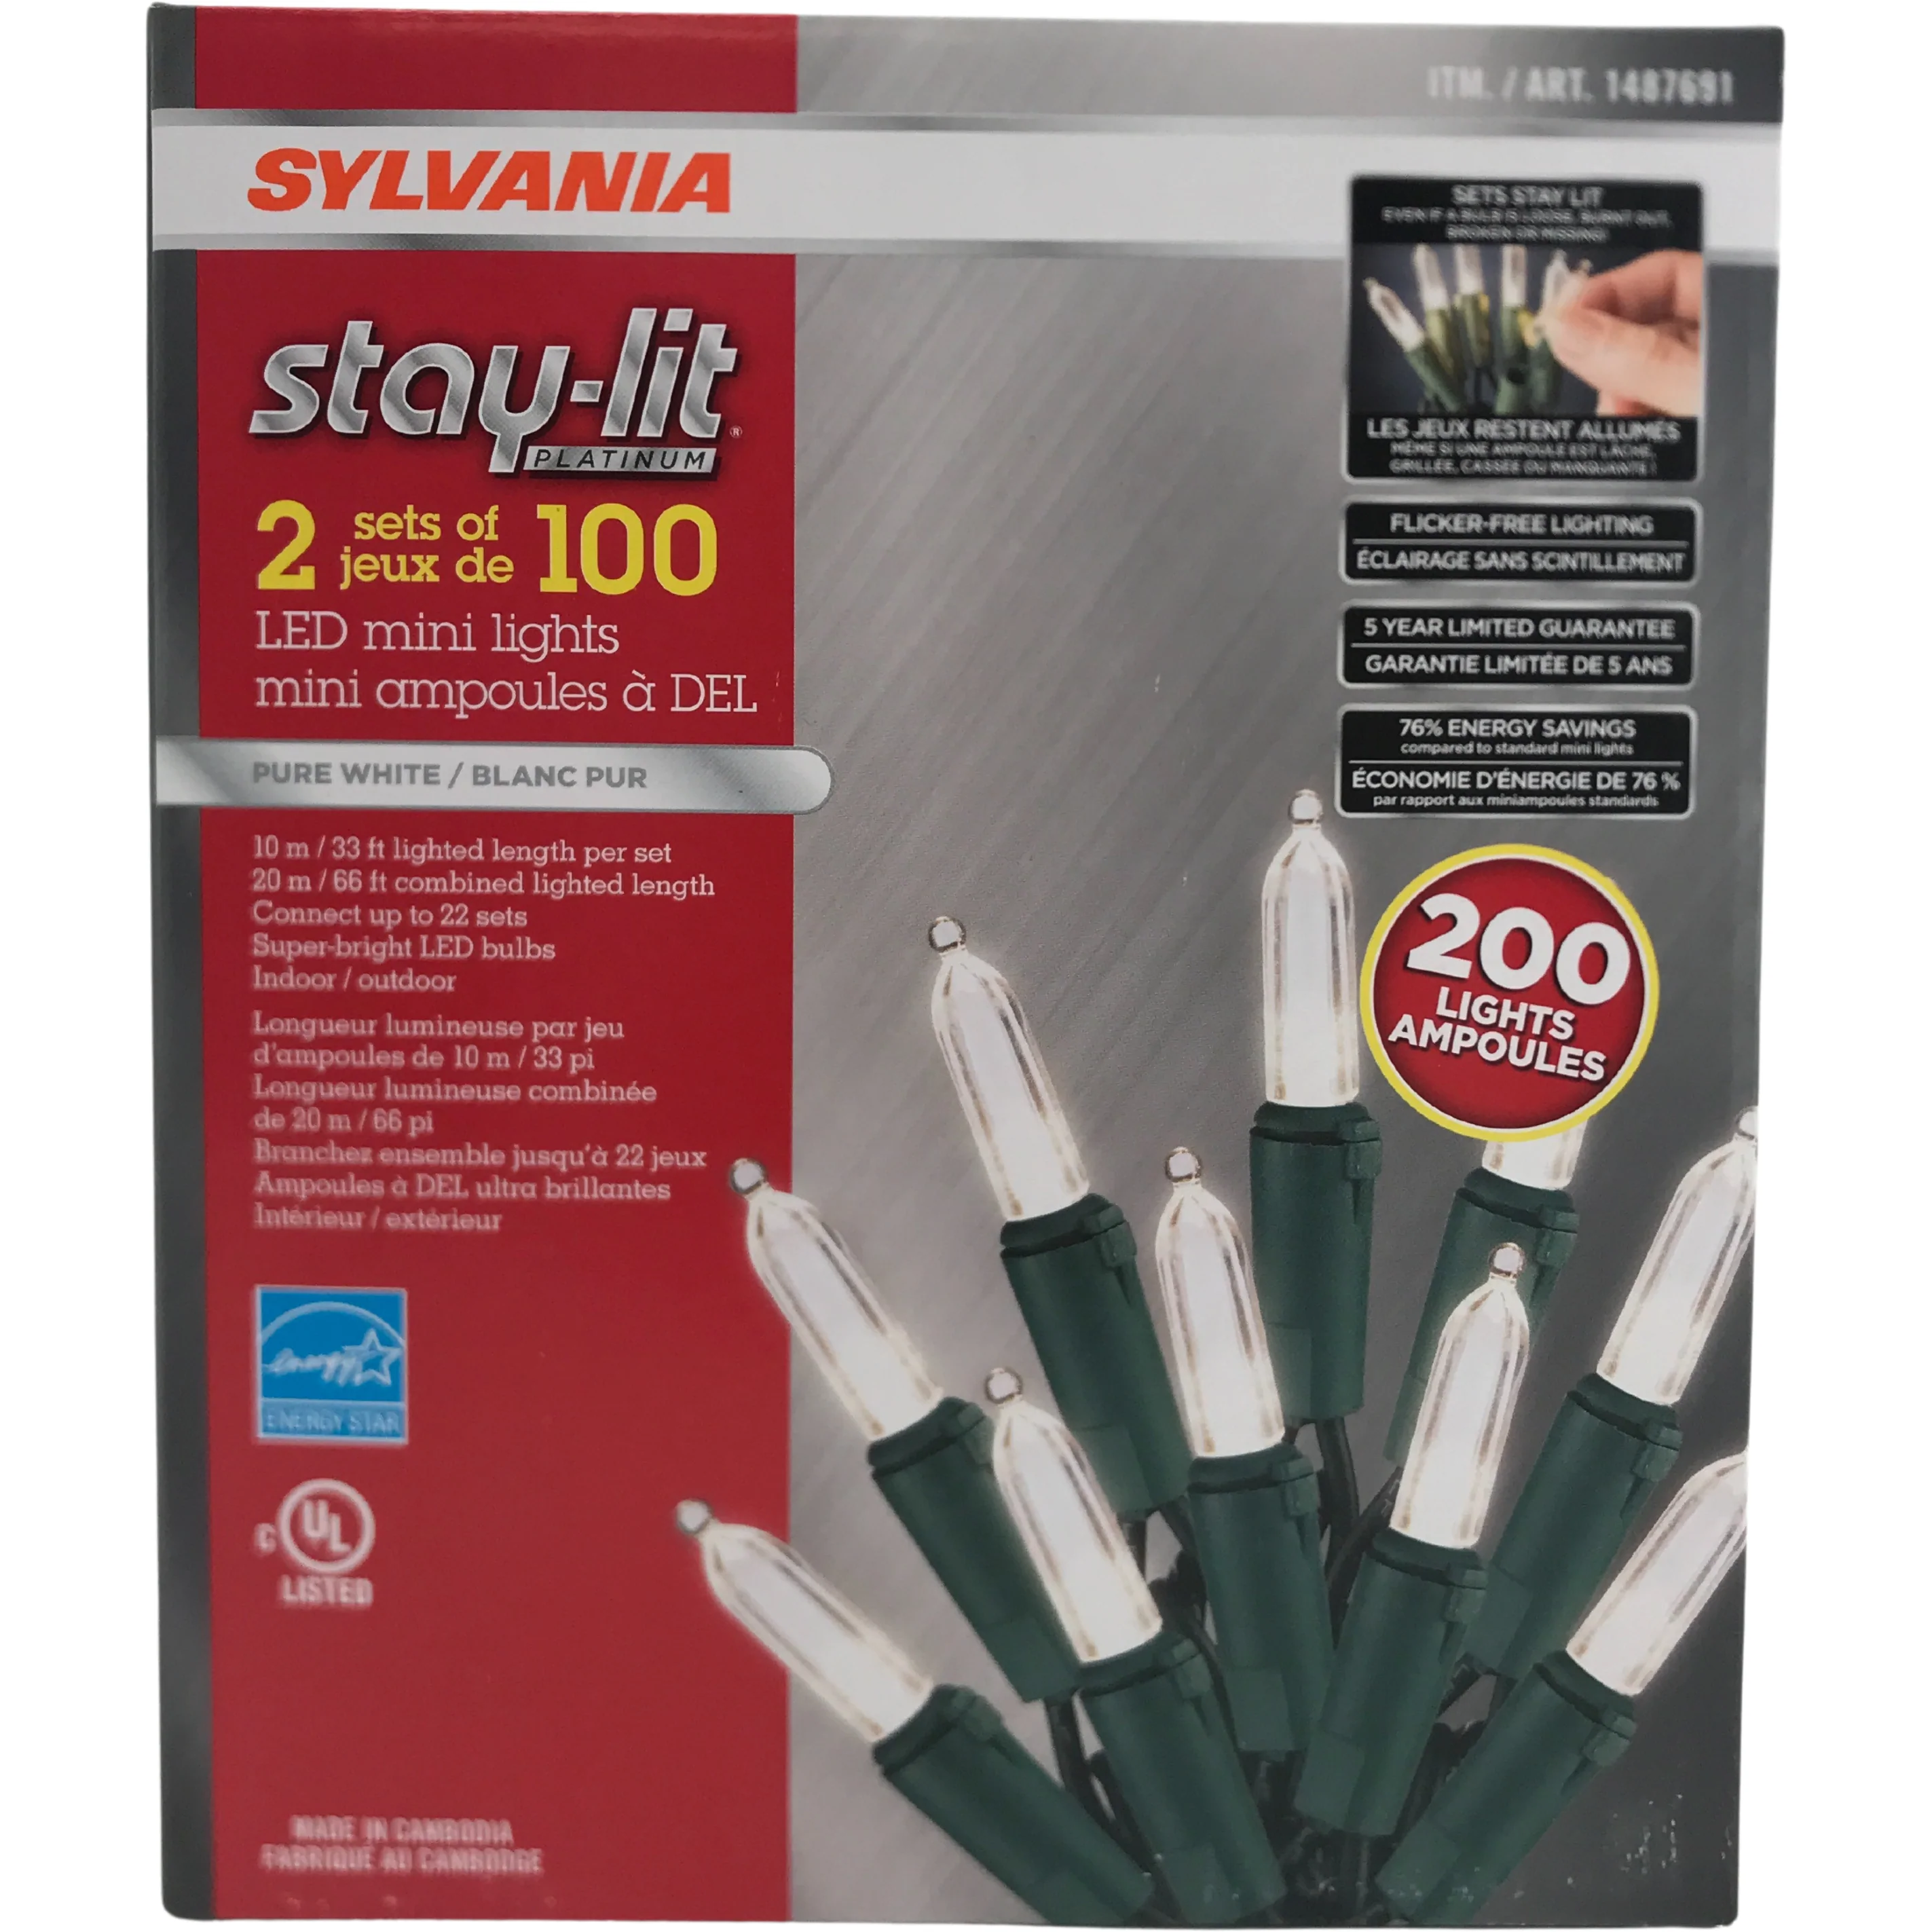 Sylvania Stay-lit LED Mini Lights: Pure White / 200 Lights / 2 Sets